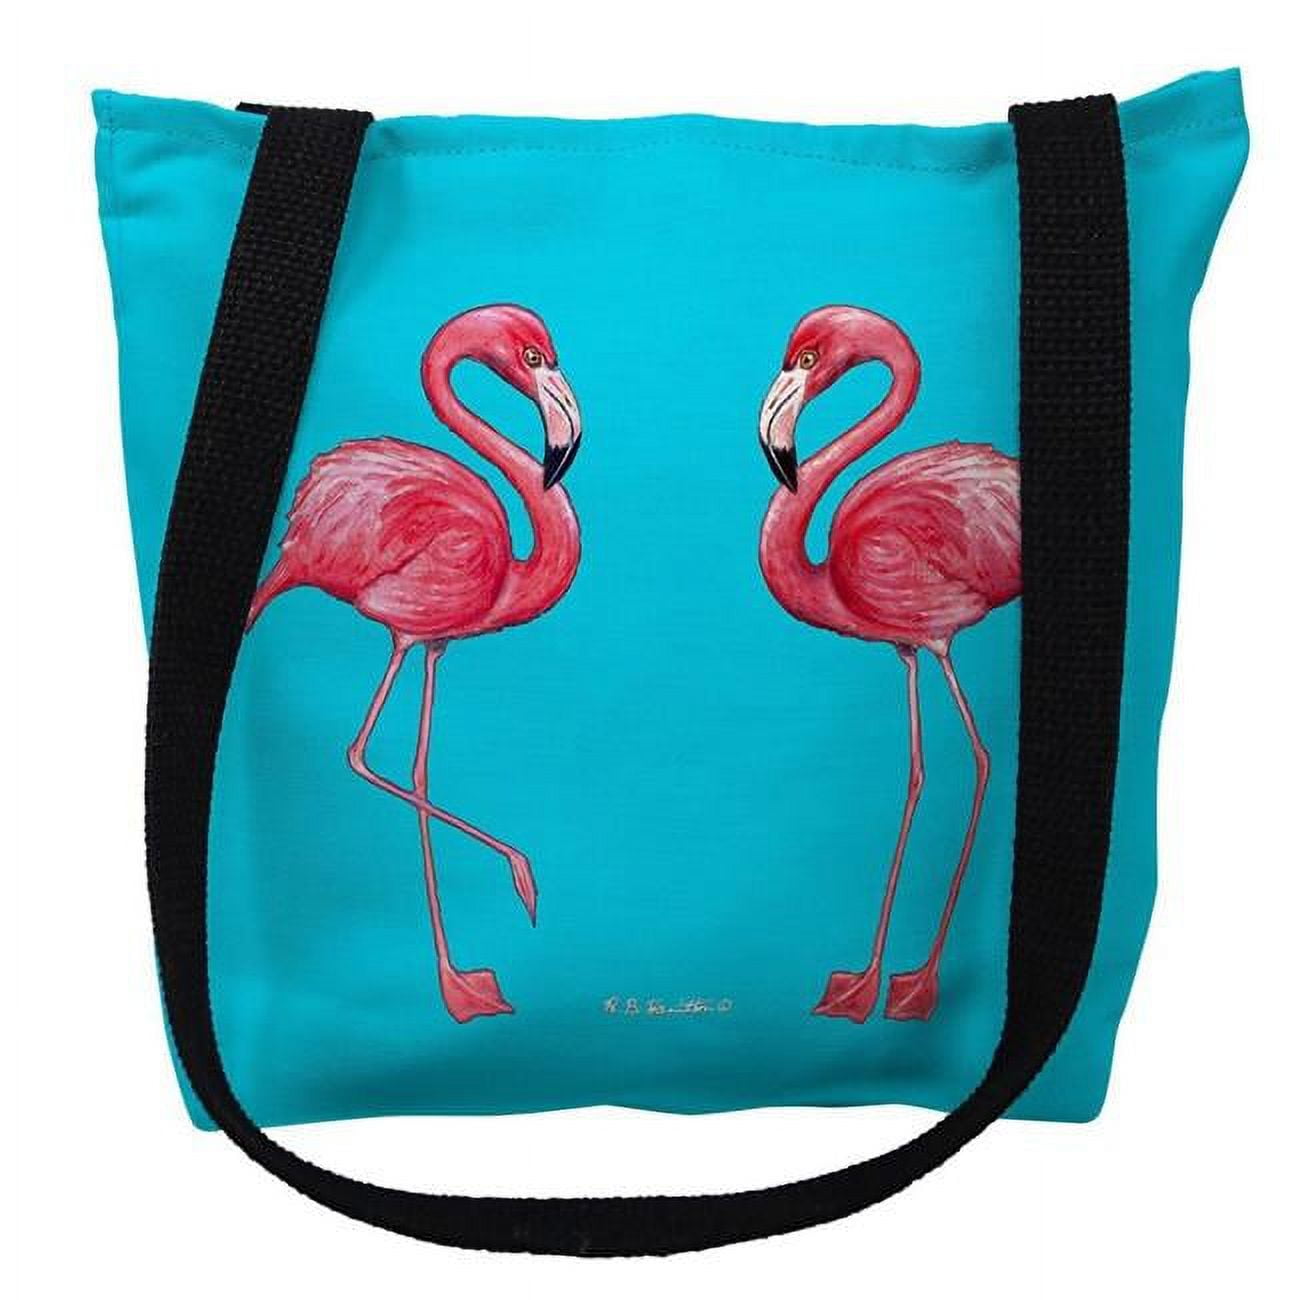 Ty084tm 16 X 16 In. Flamingos On Turquoise Tote Bag - Medium